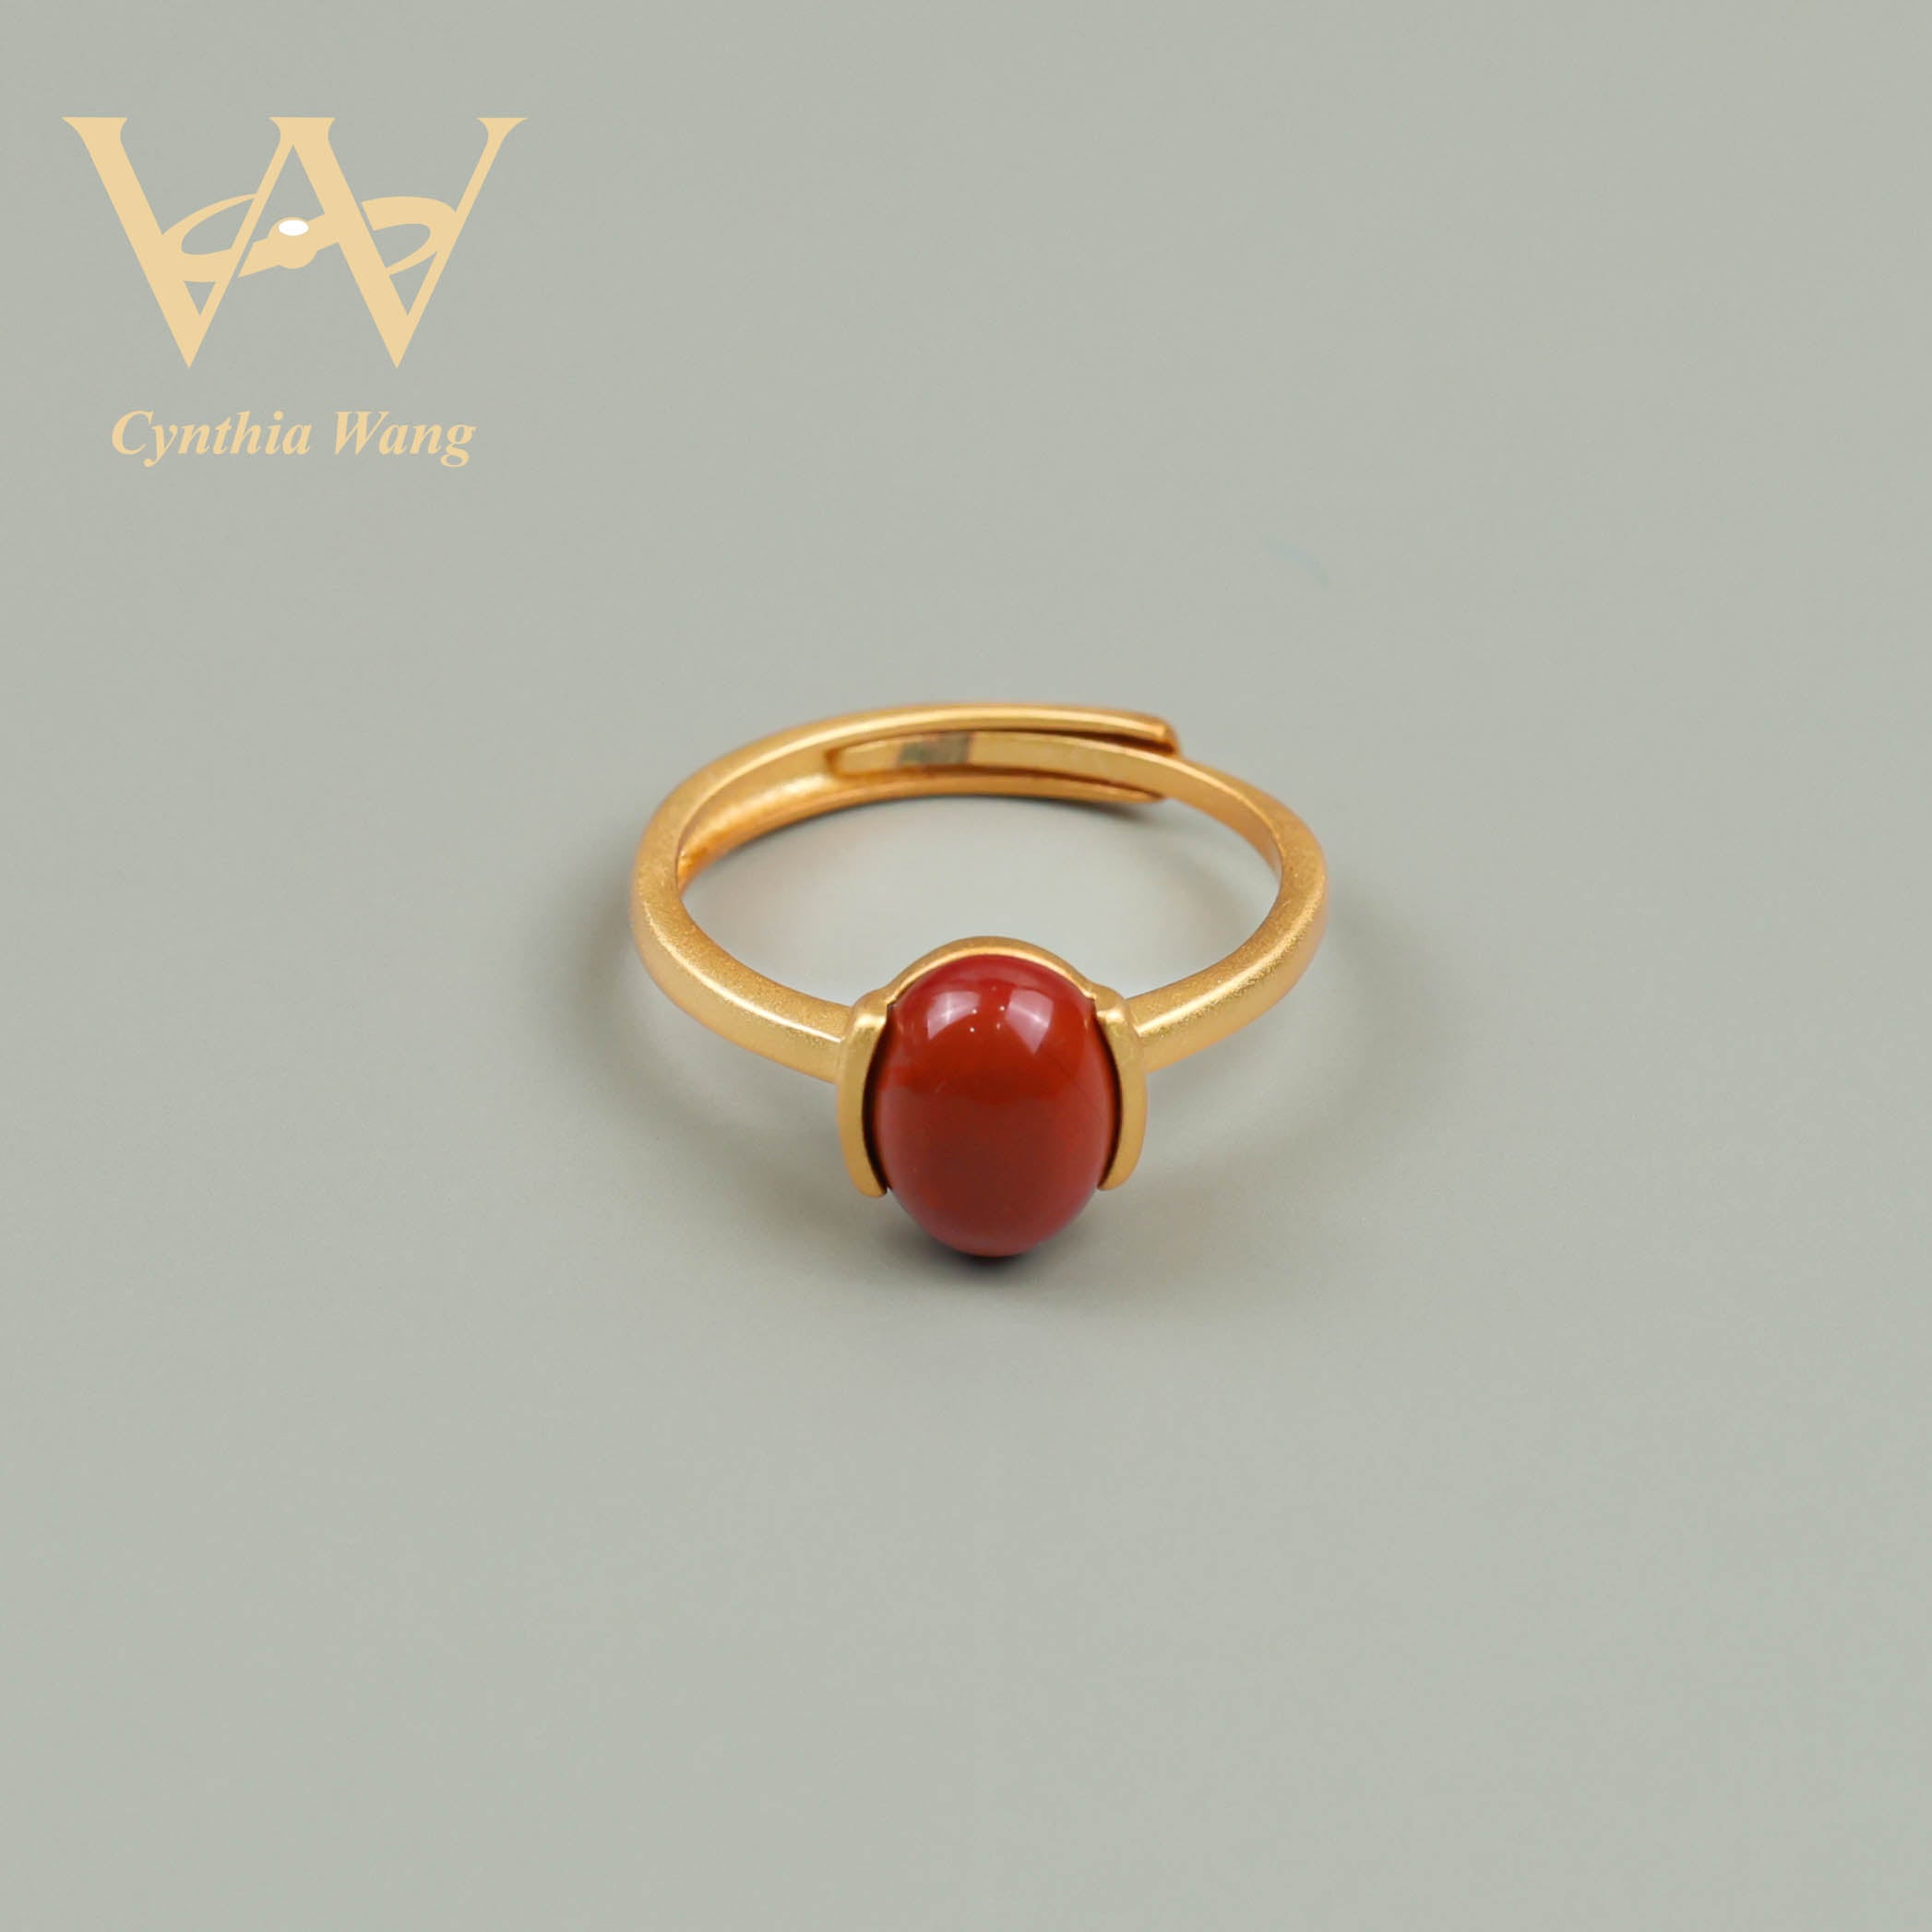 'Crimson Waltz' South Red Carnelian Ring